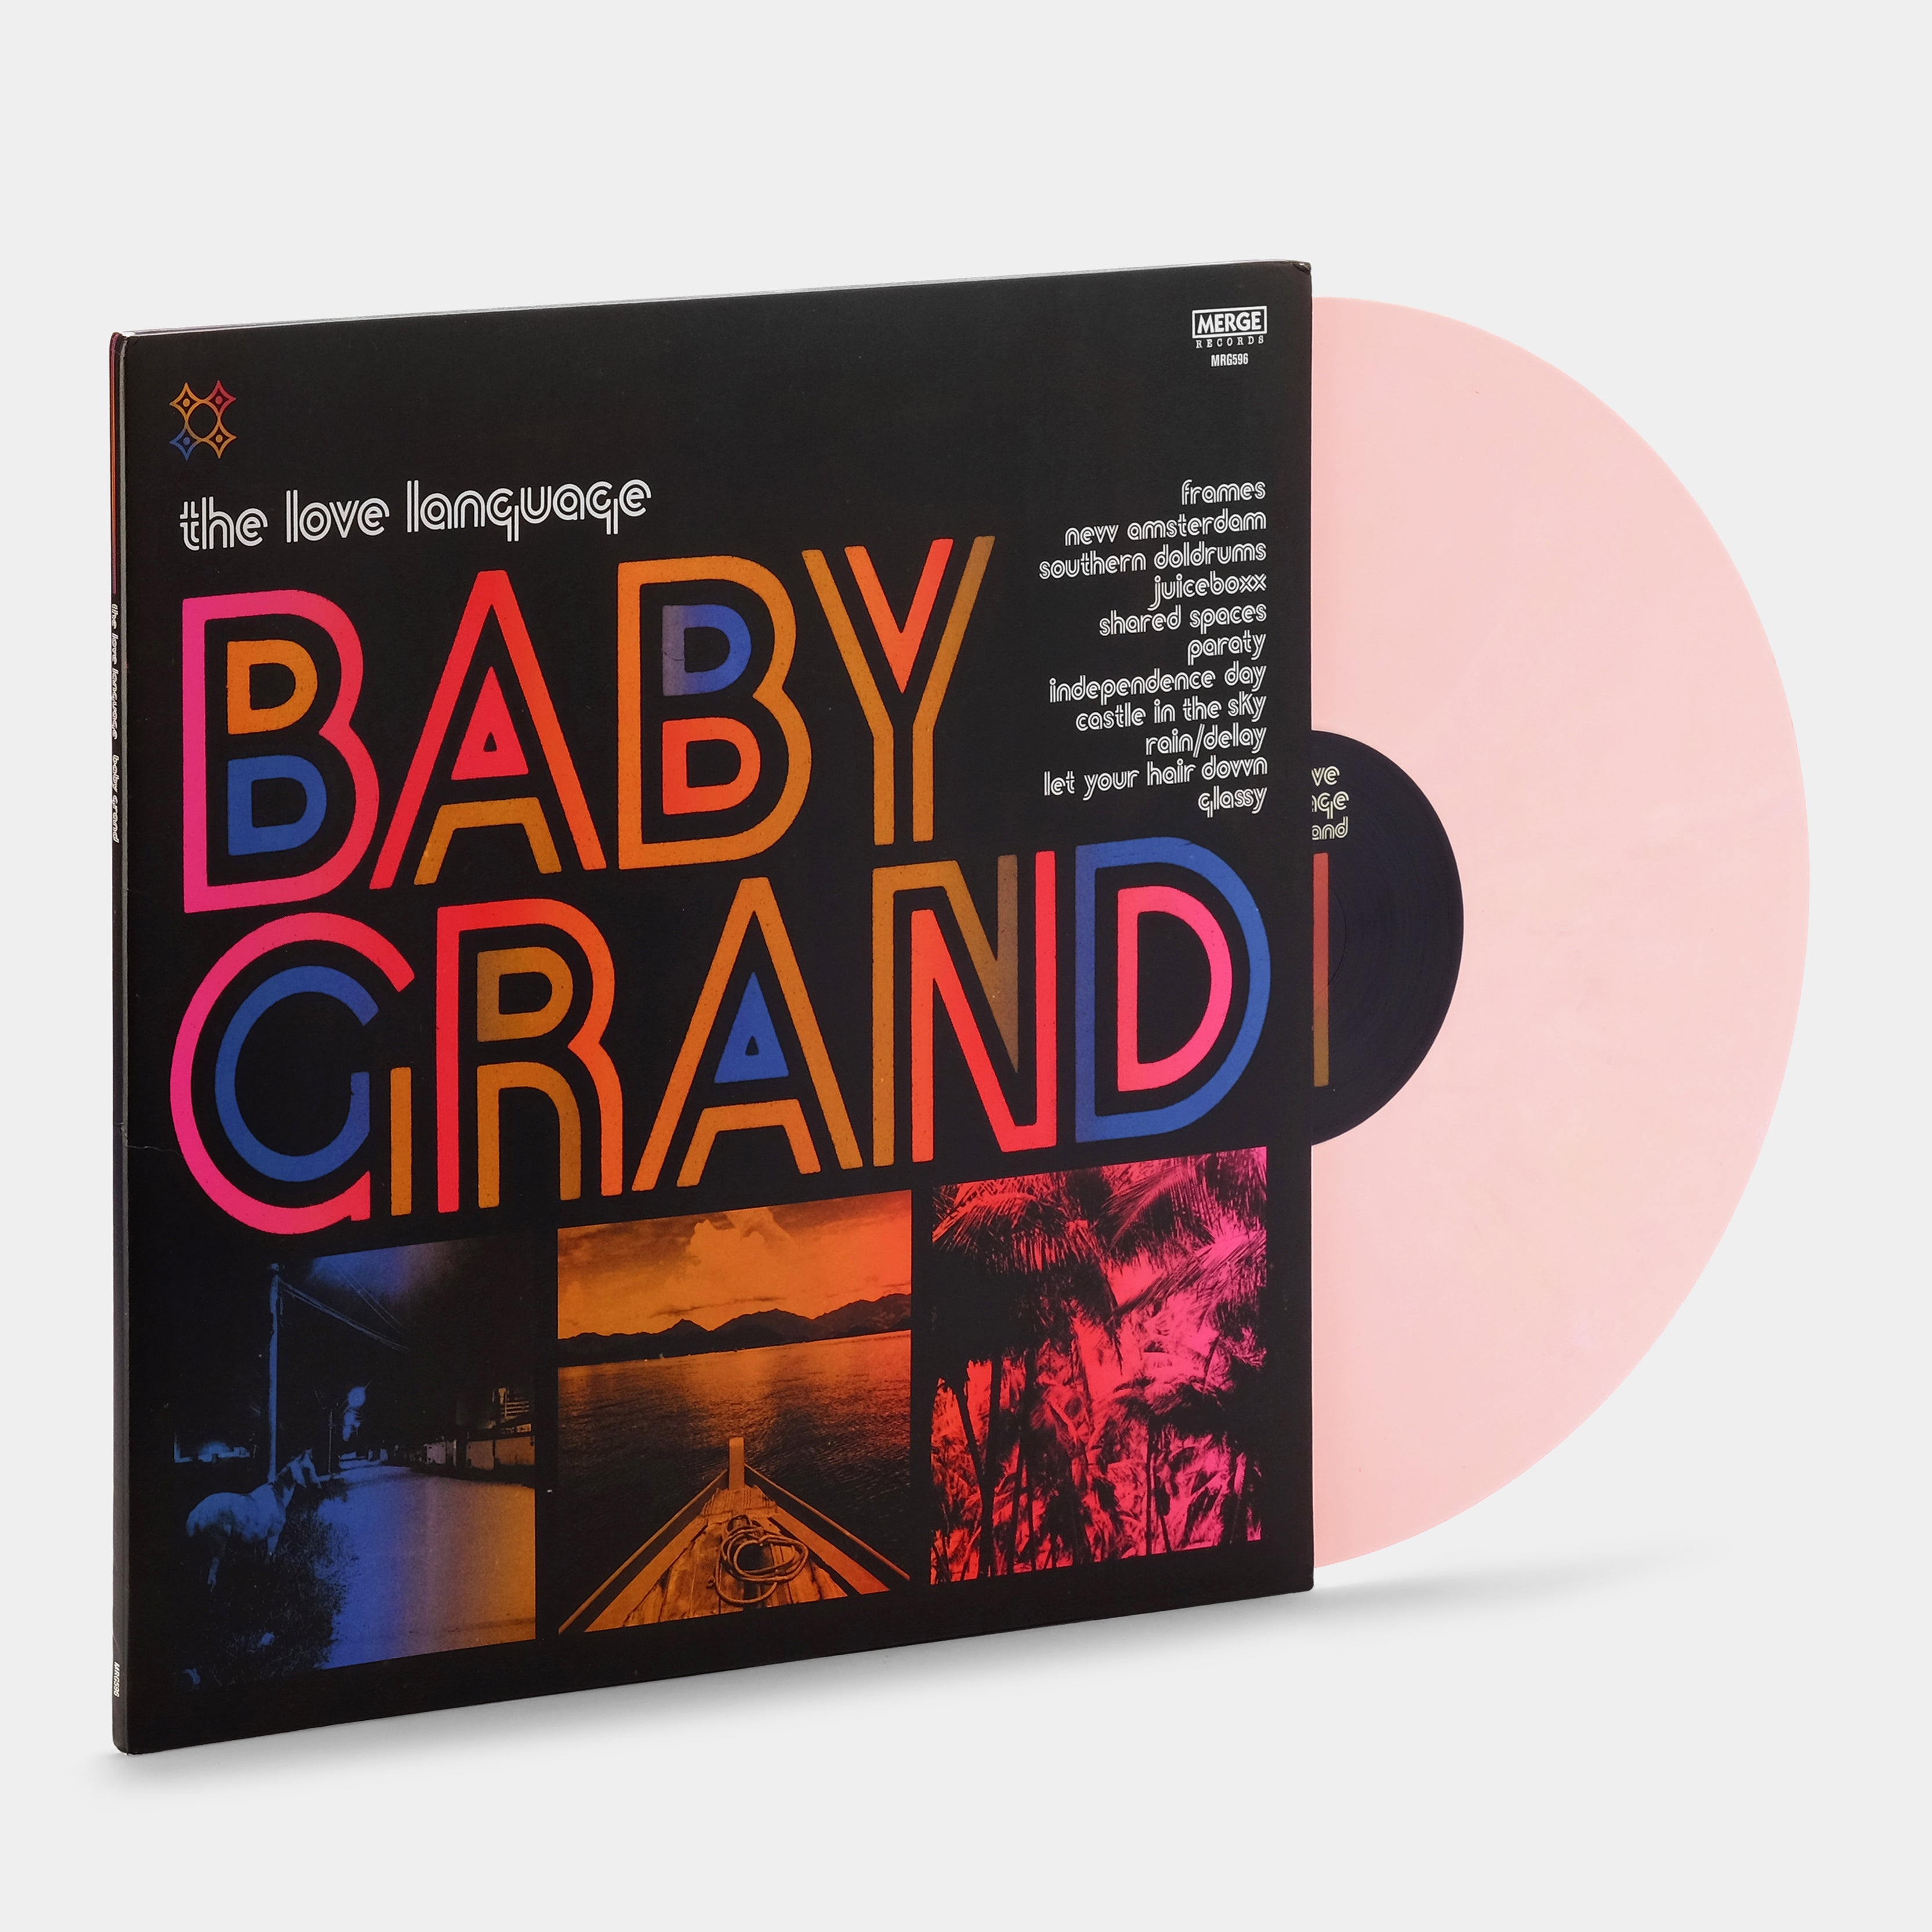 The Love Language - Baby Grand (Peak Vinyl Edition) LP Pink & Yellow Marble Vinyl Record